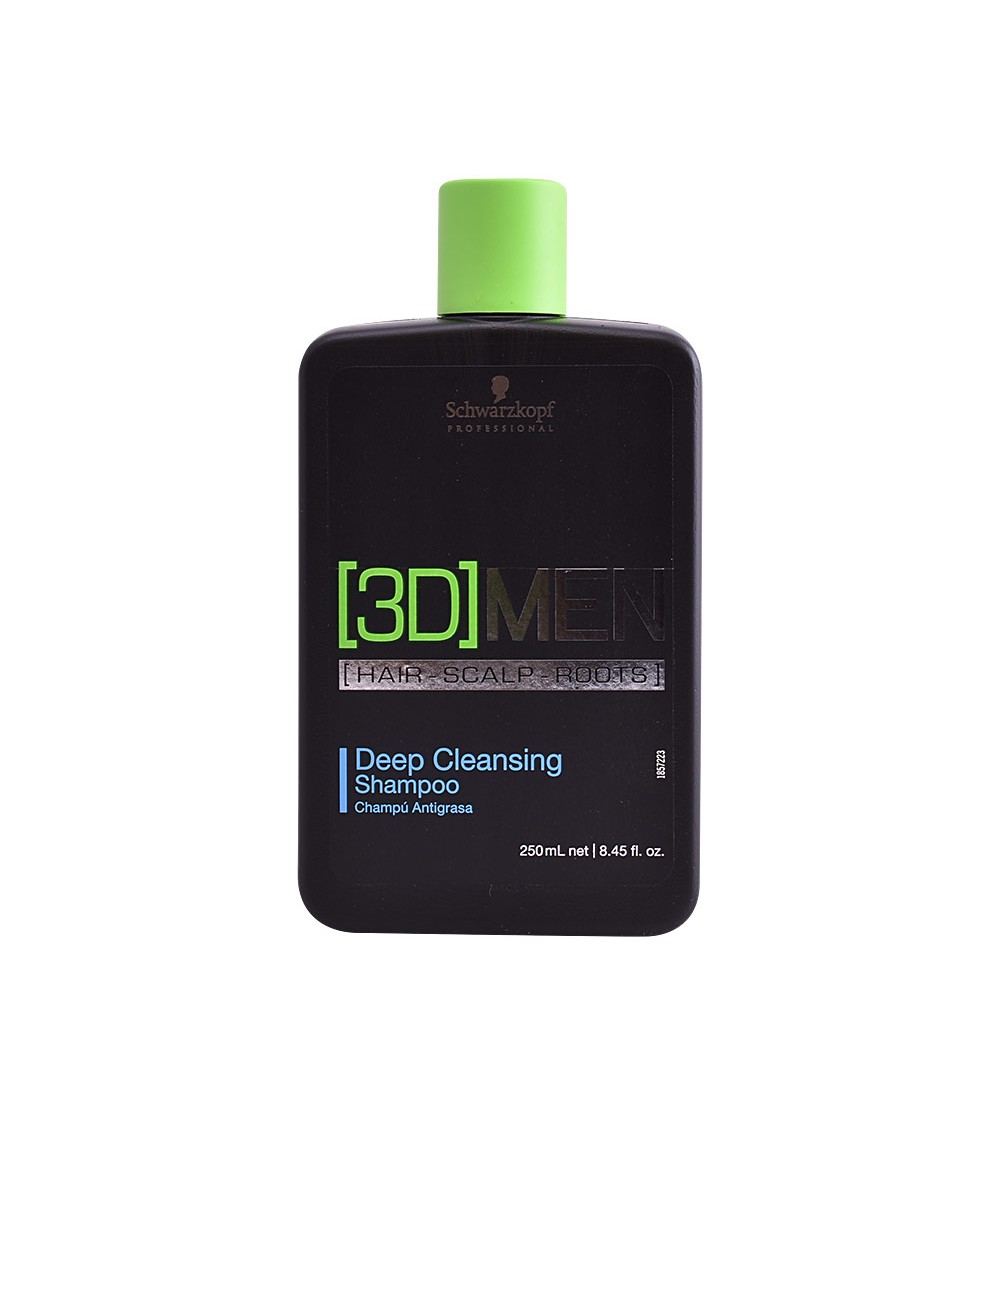 3D MEN deep cleansing shampoo 250 ml NE71492